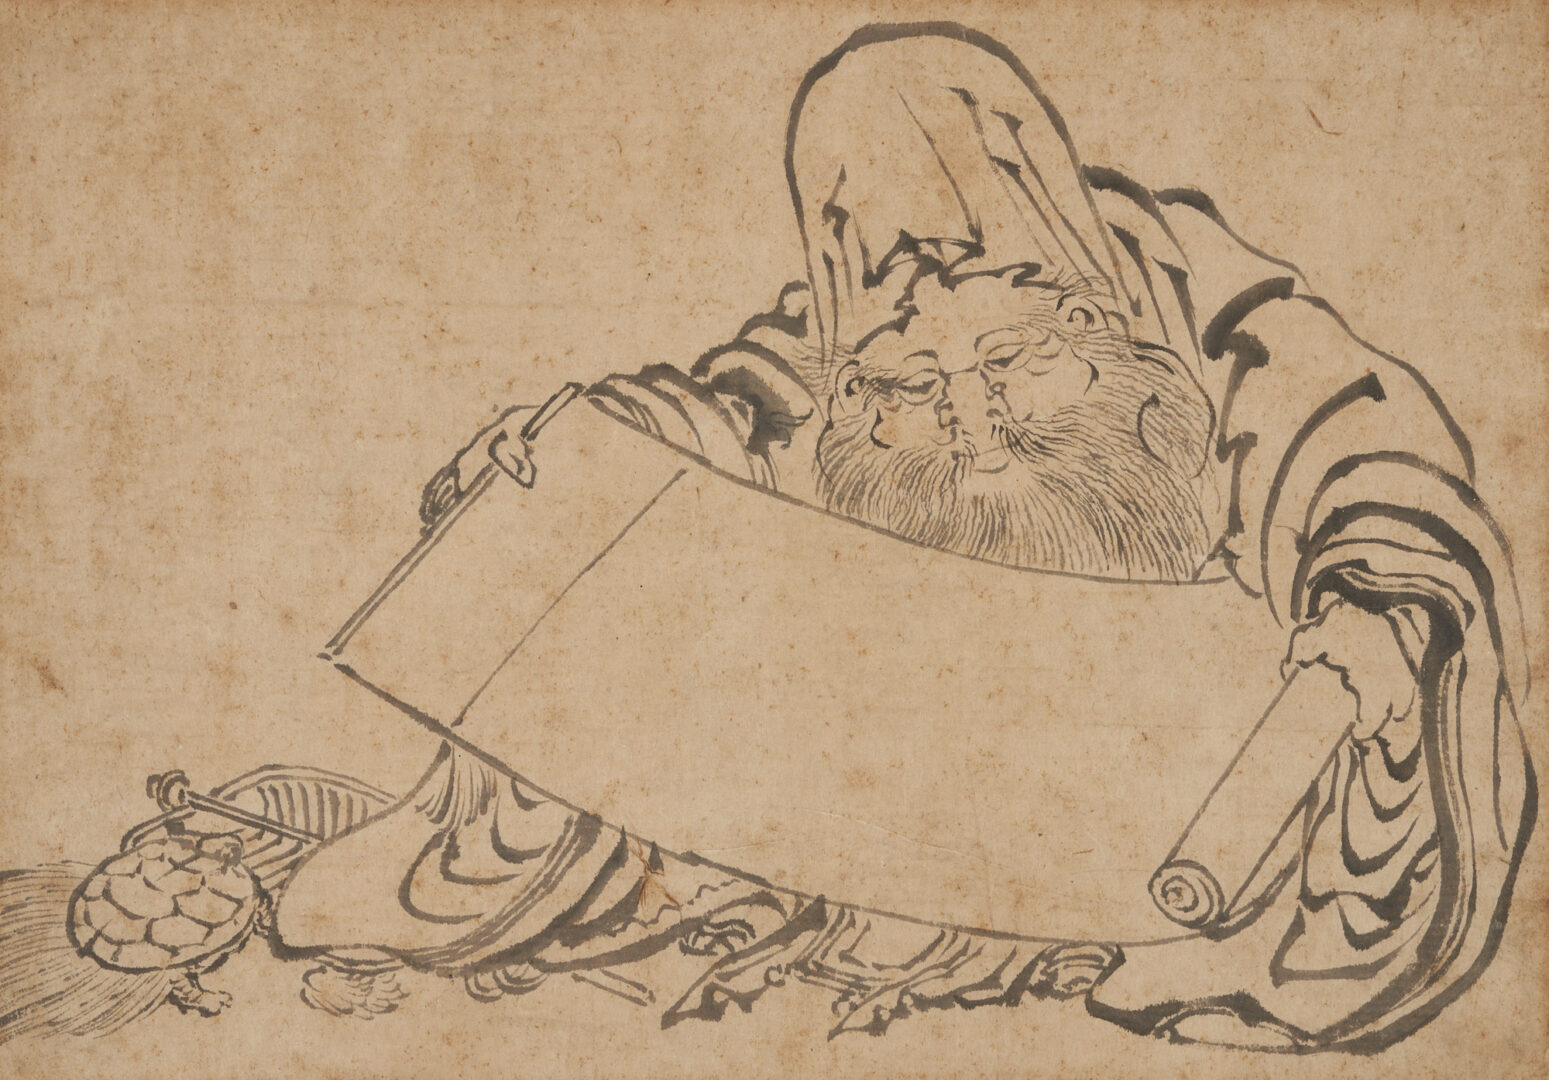 Lot 16: Drawing of Jurolin attr. Hokusai, ex-Ernest Fenollosa